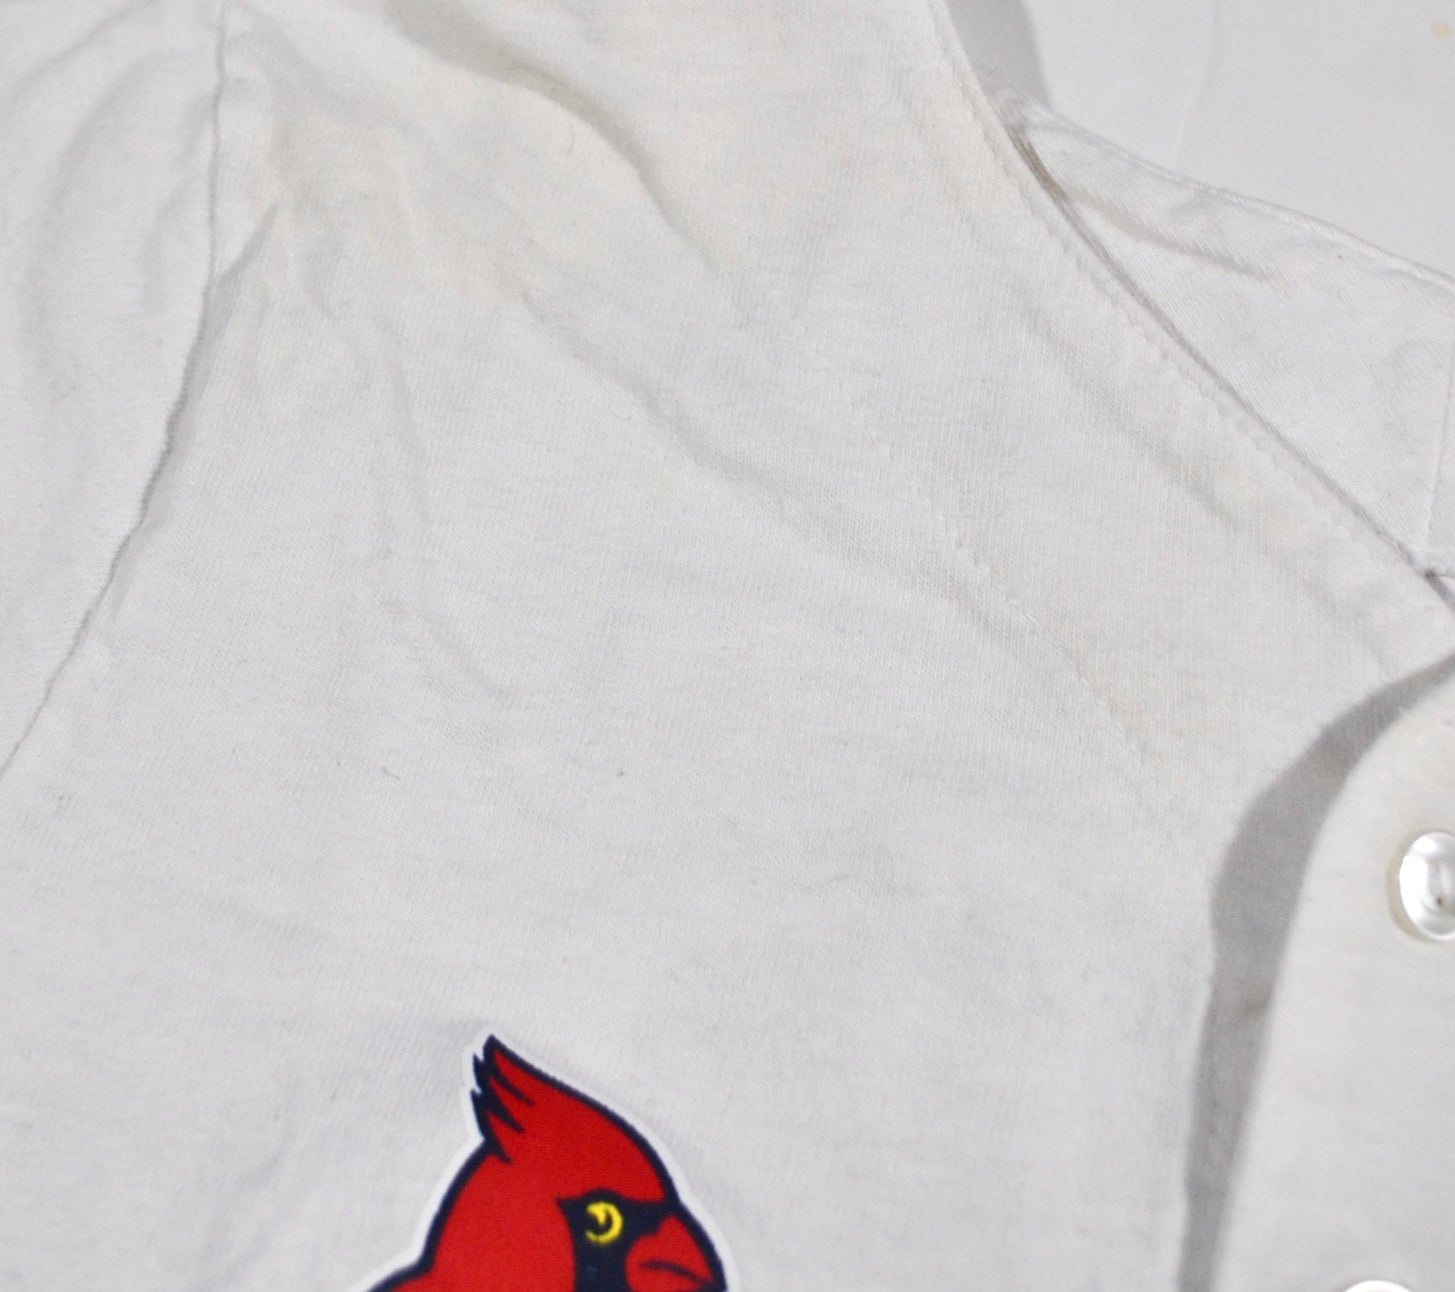 Mark McGwire Cardinals jersey